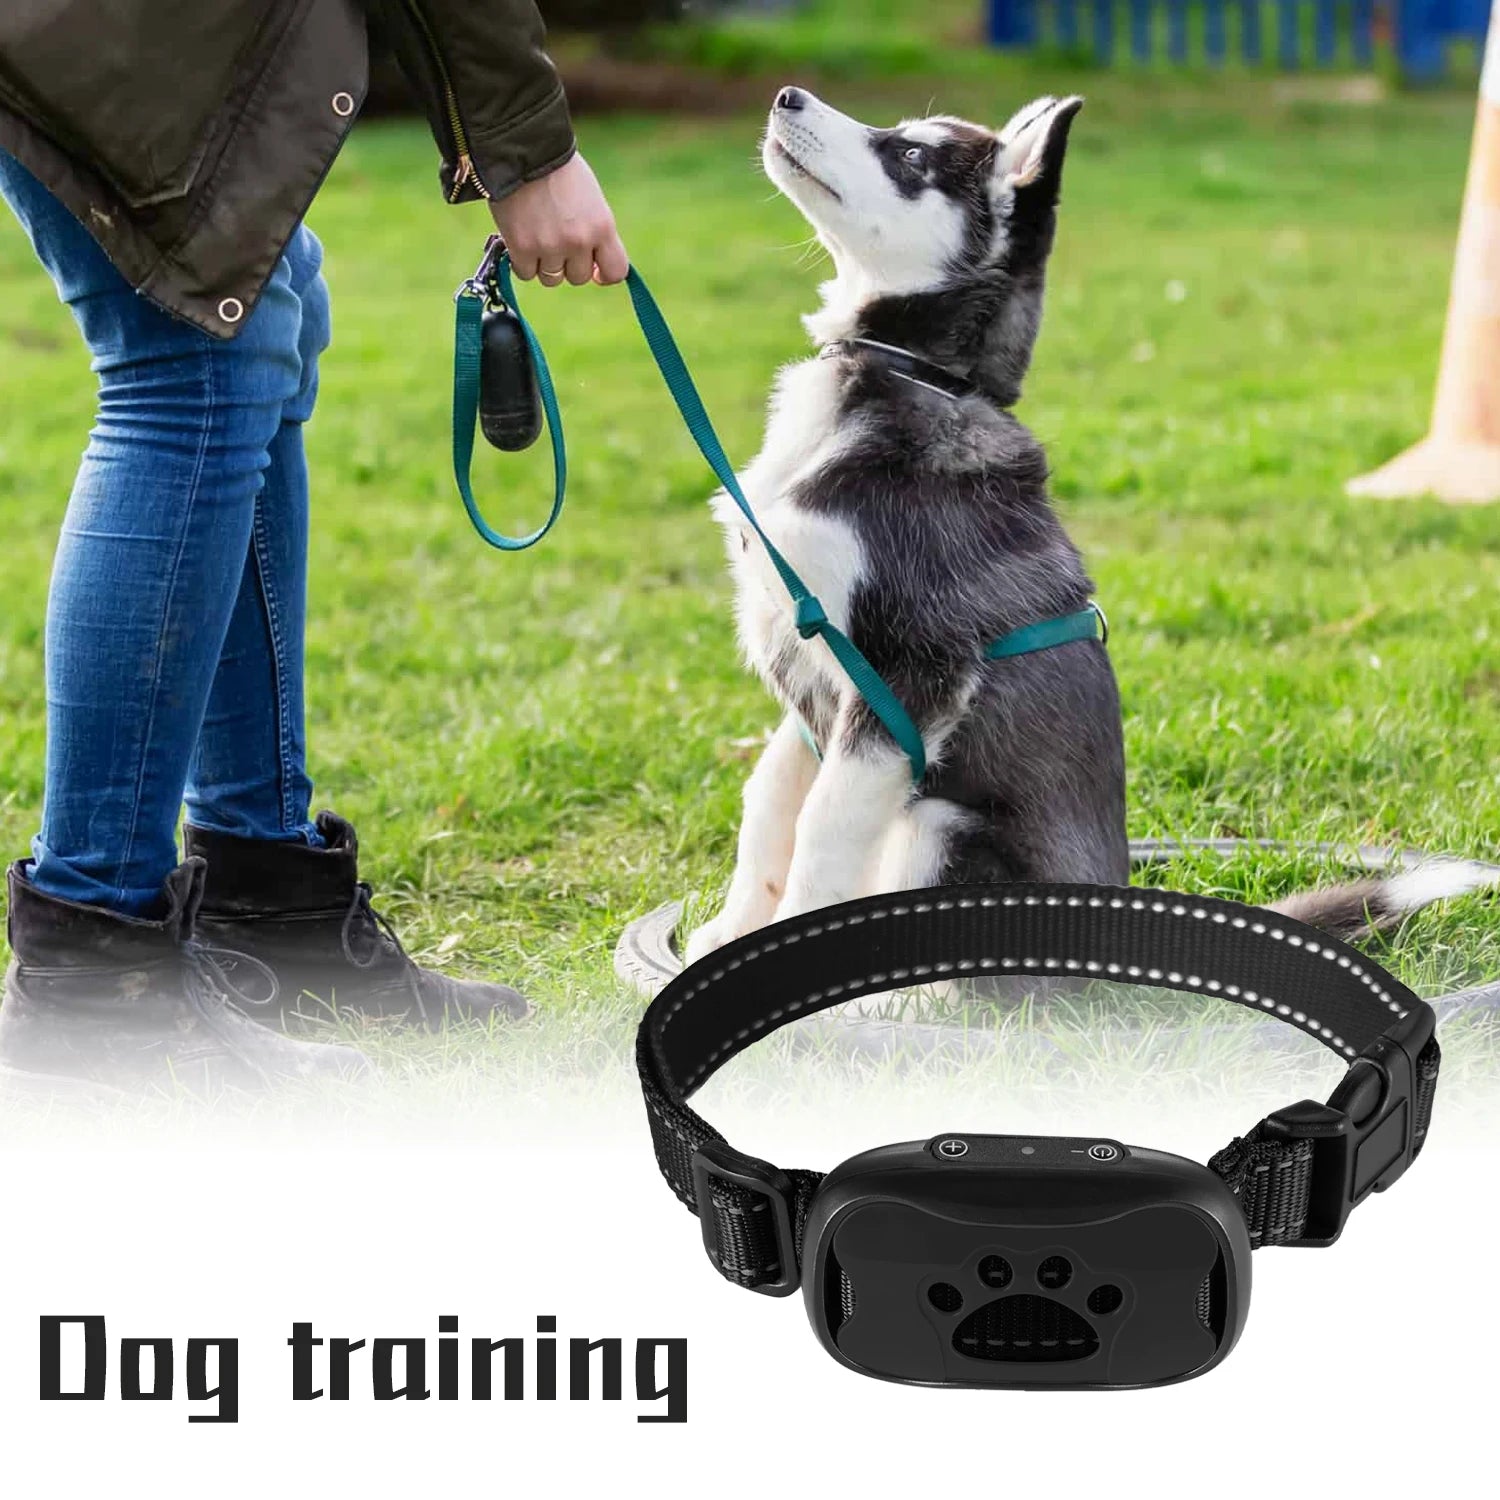 Electric Dogs Training Collar: Advanced Bark Control & Waterproof Design  petlums.com   